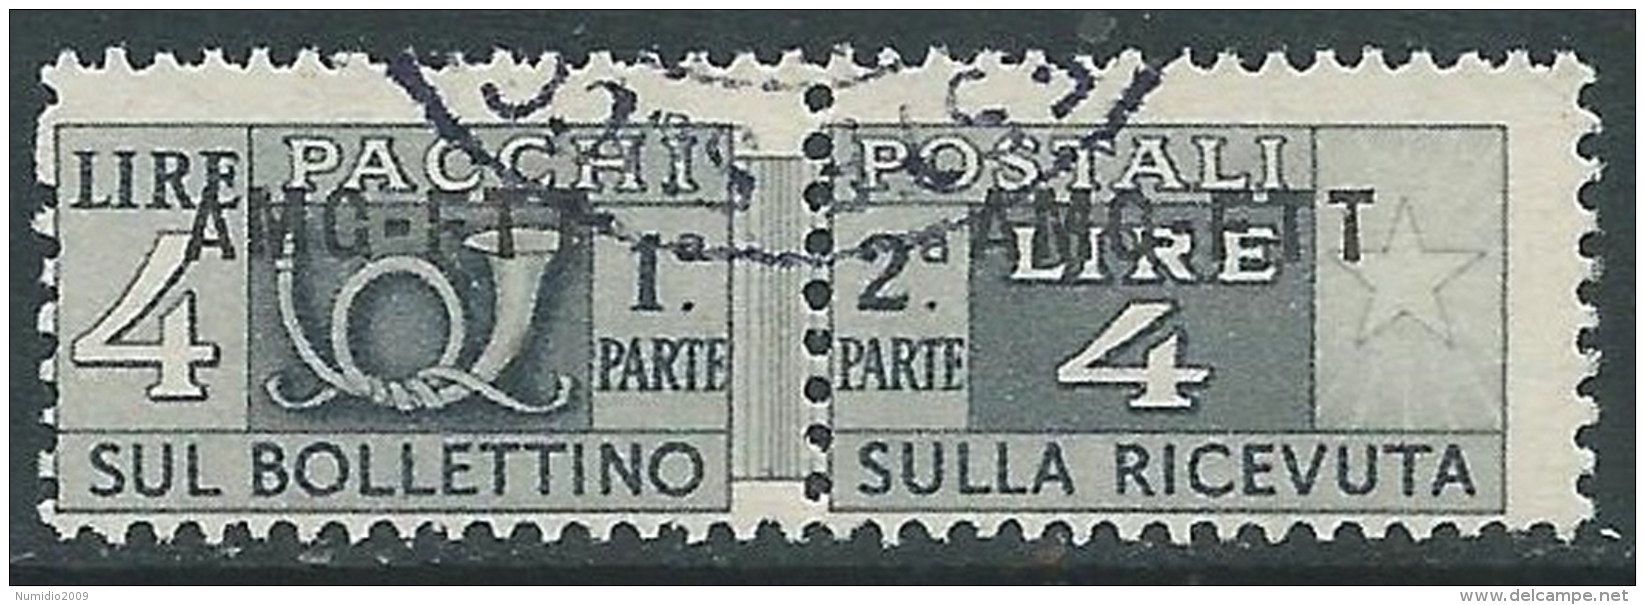 1949-53 TRIESTE A PACCHI POSTALI USATO 4 LIRE - LL2 - Colis Postaux/concession